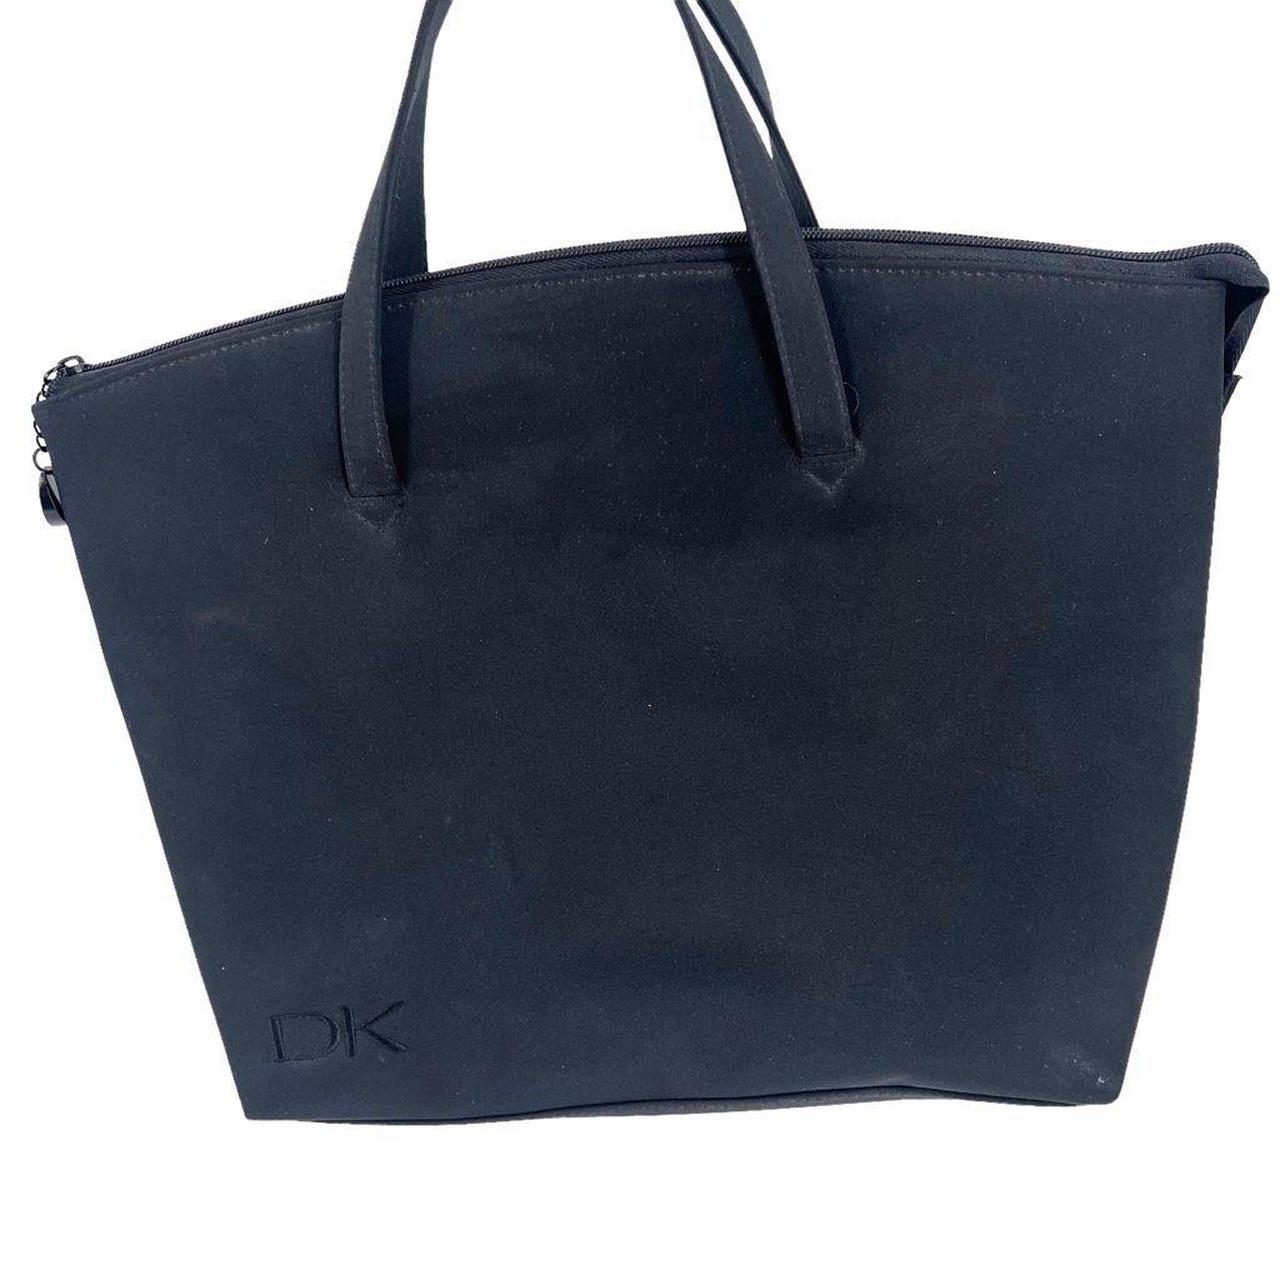 Donna Karan, Bags, Donna Karan Black Tote Bag